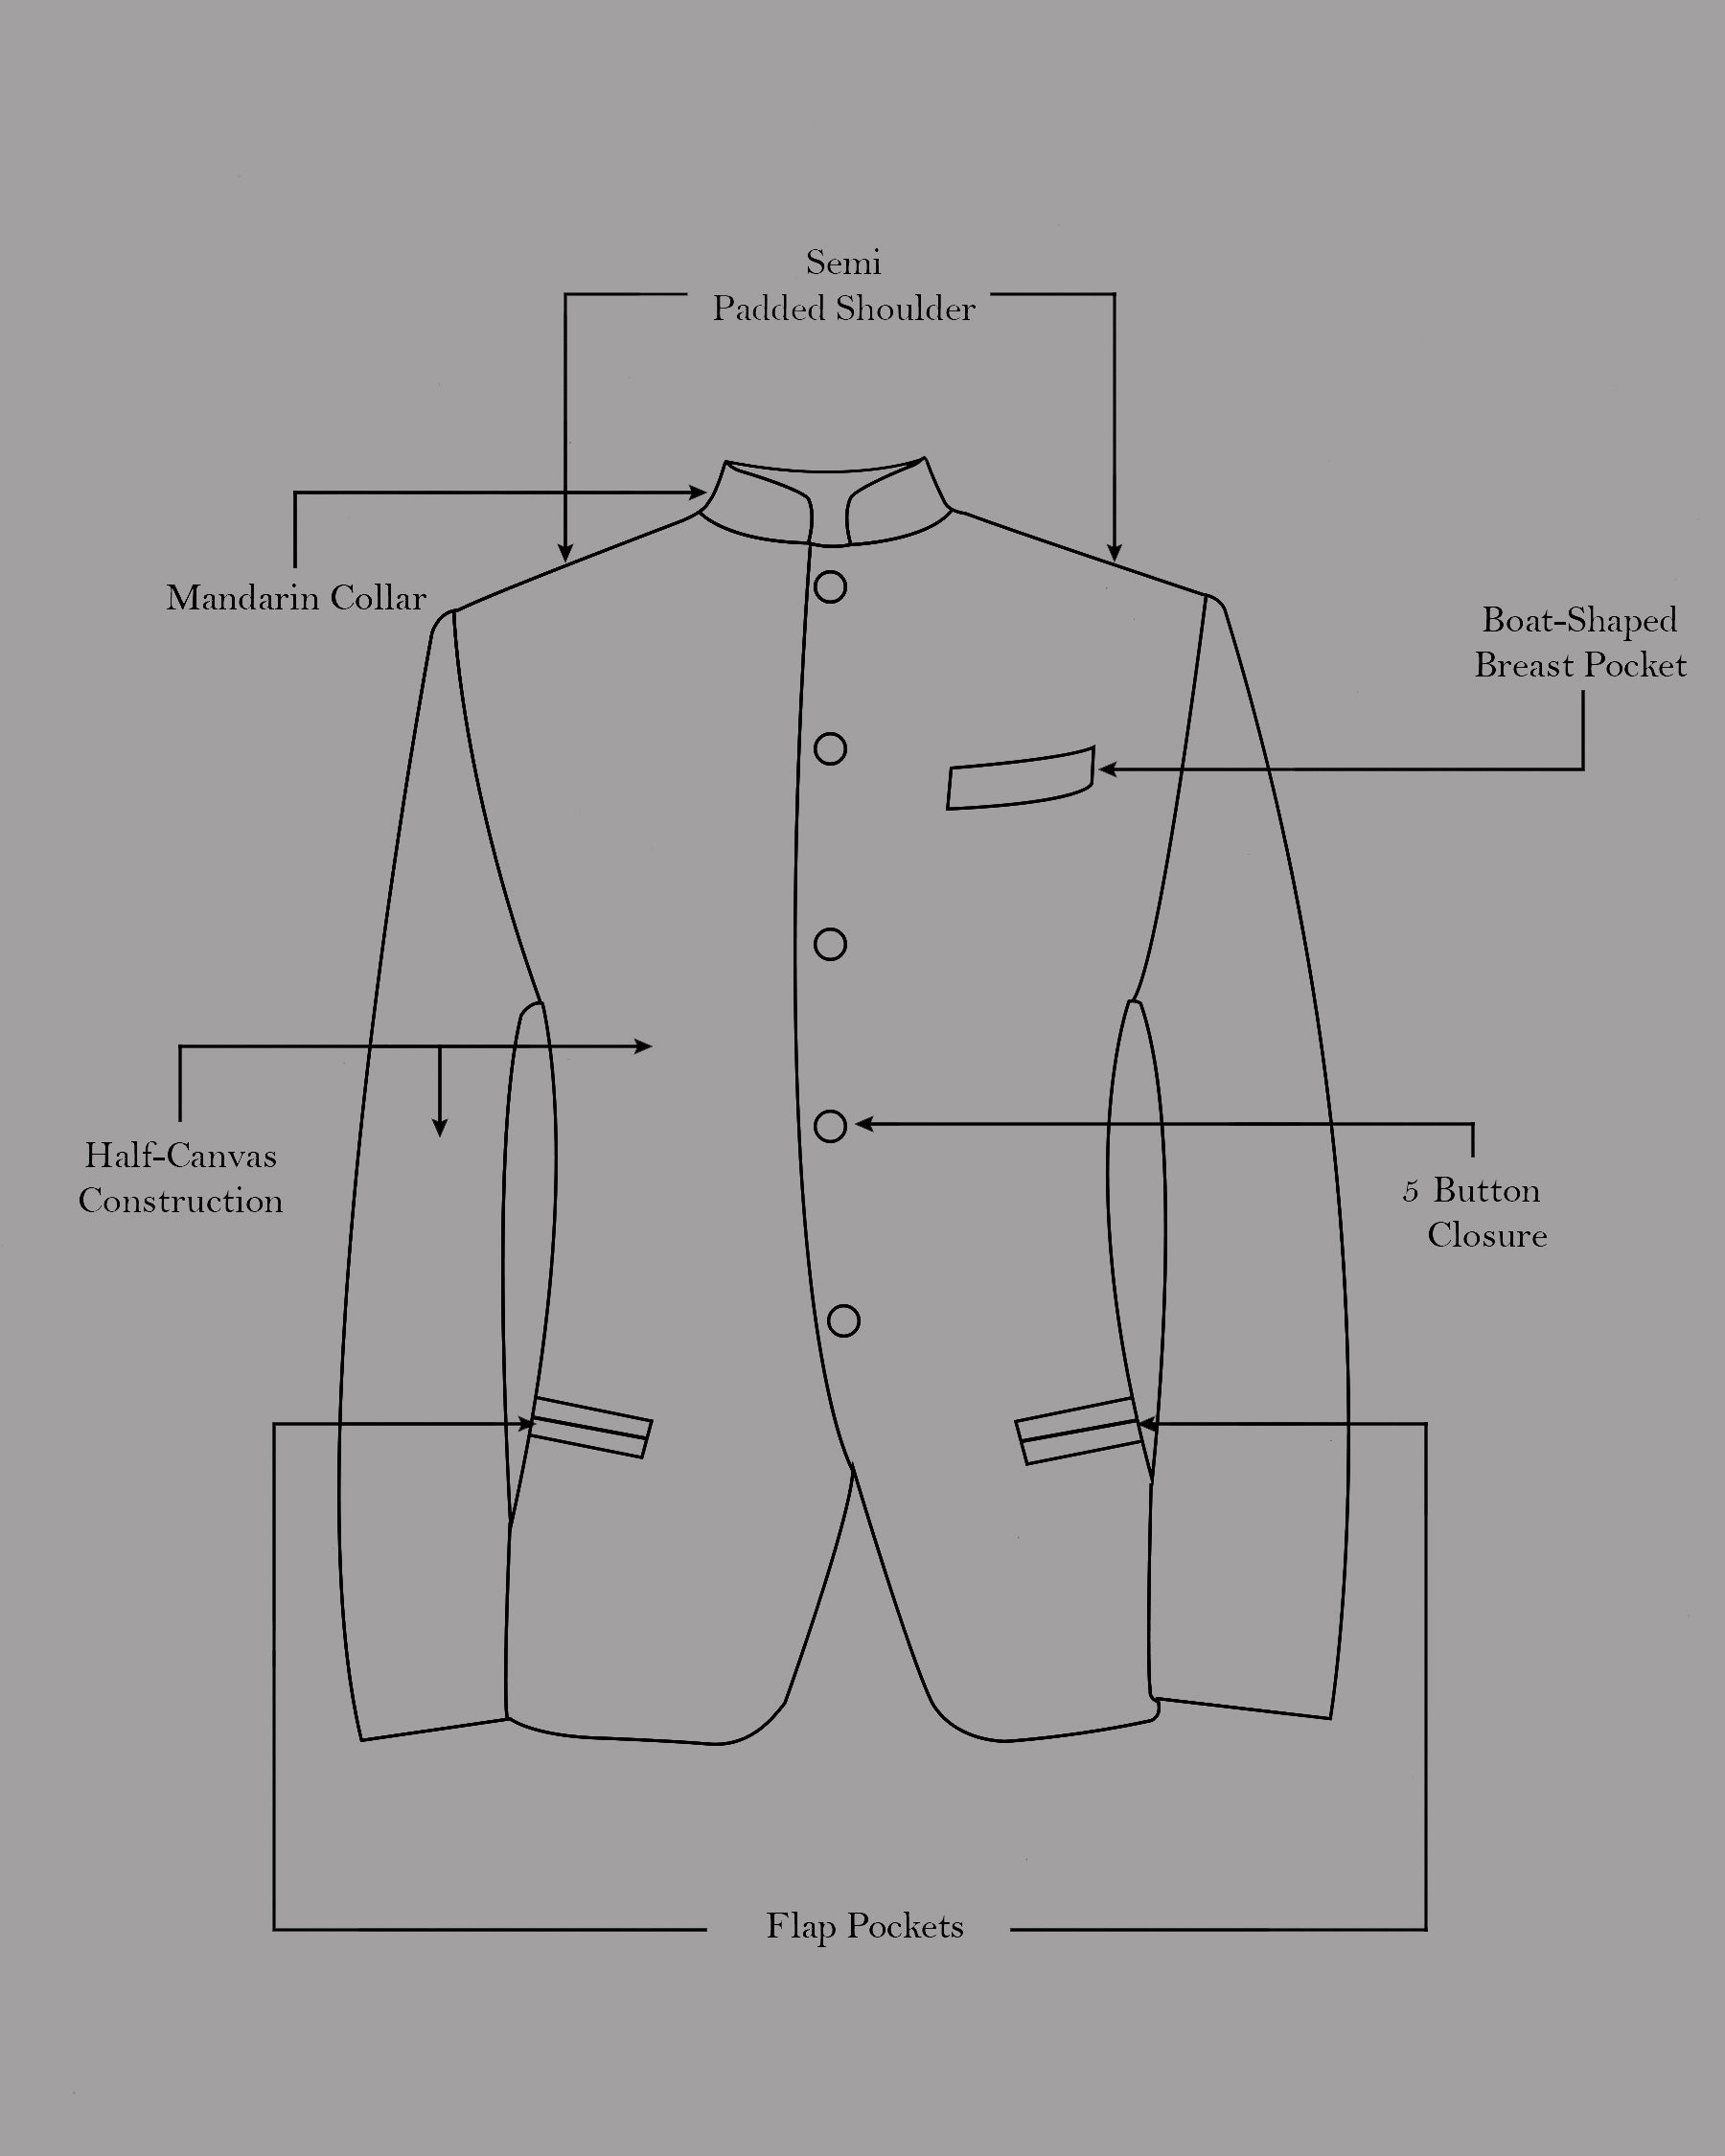 Pavlova Cream Solid Stretchable Premium Cotton Bandhgala traveler Suit